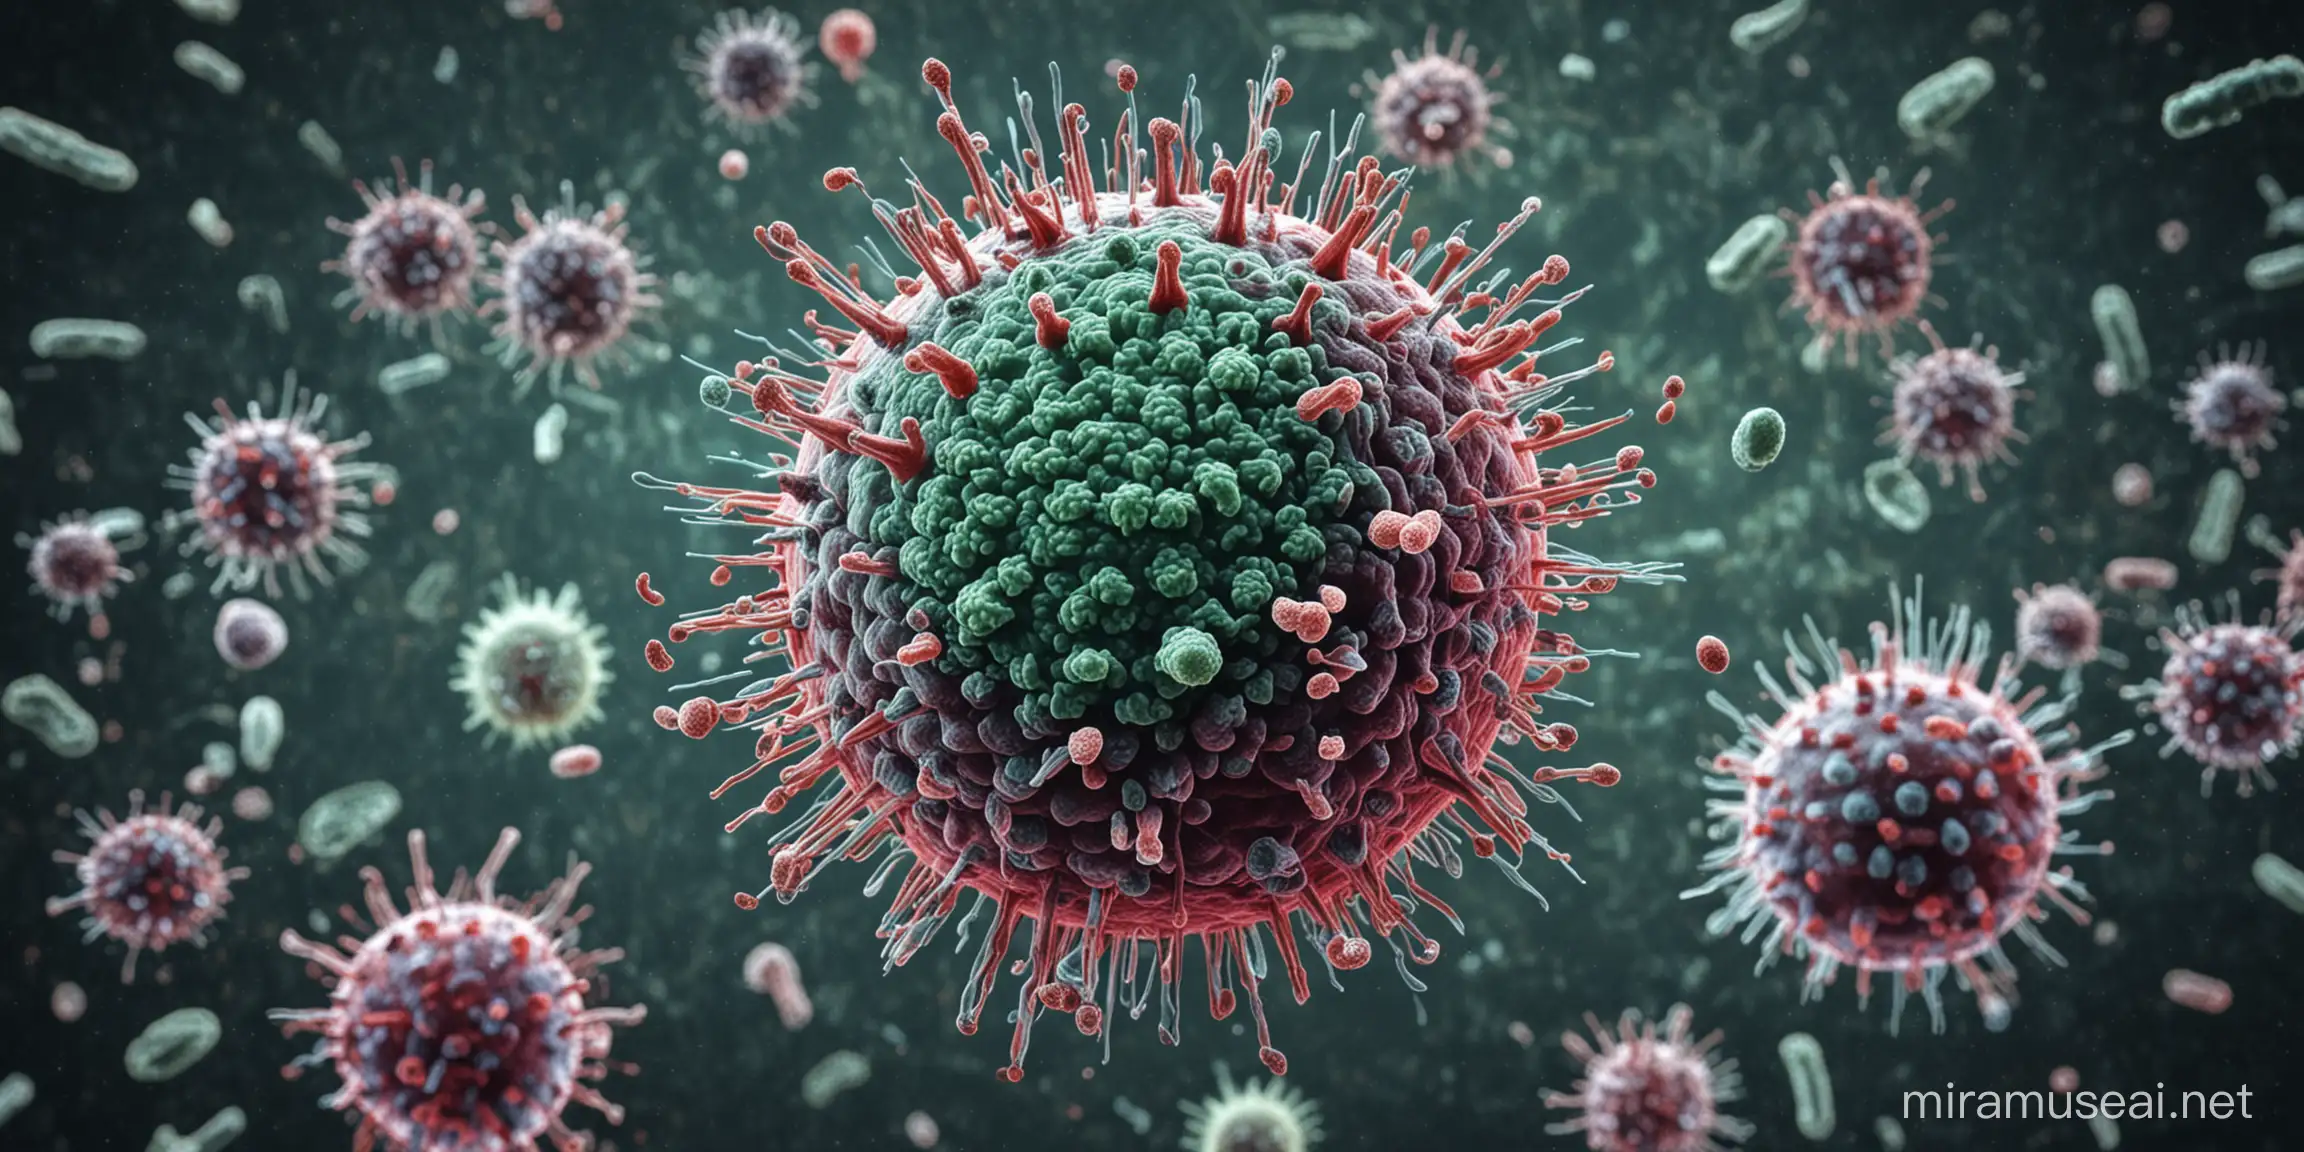 Microscopic Battle Bacteria versus Virus in a Biological Struggle